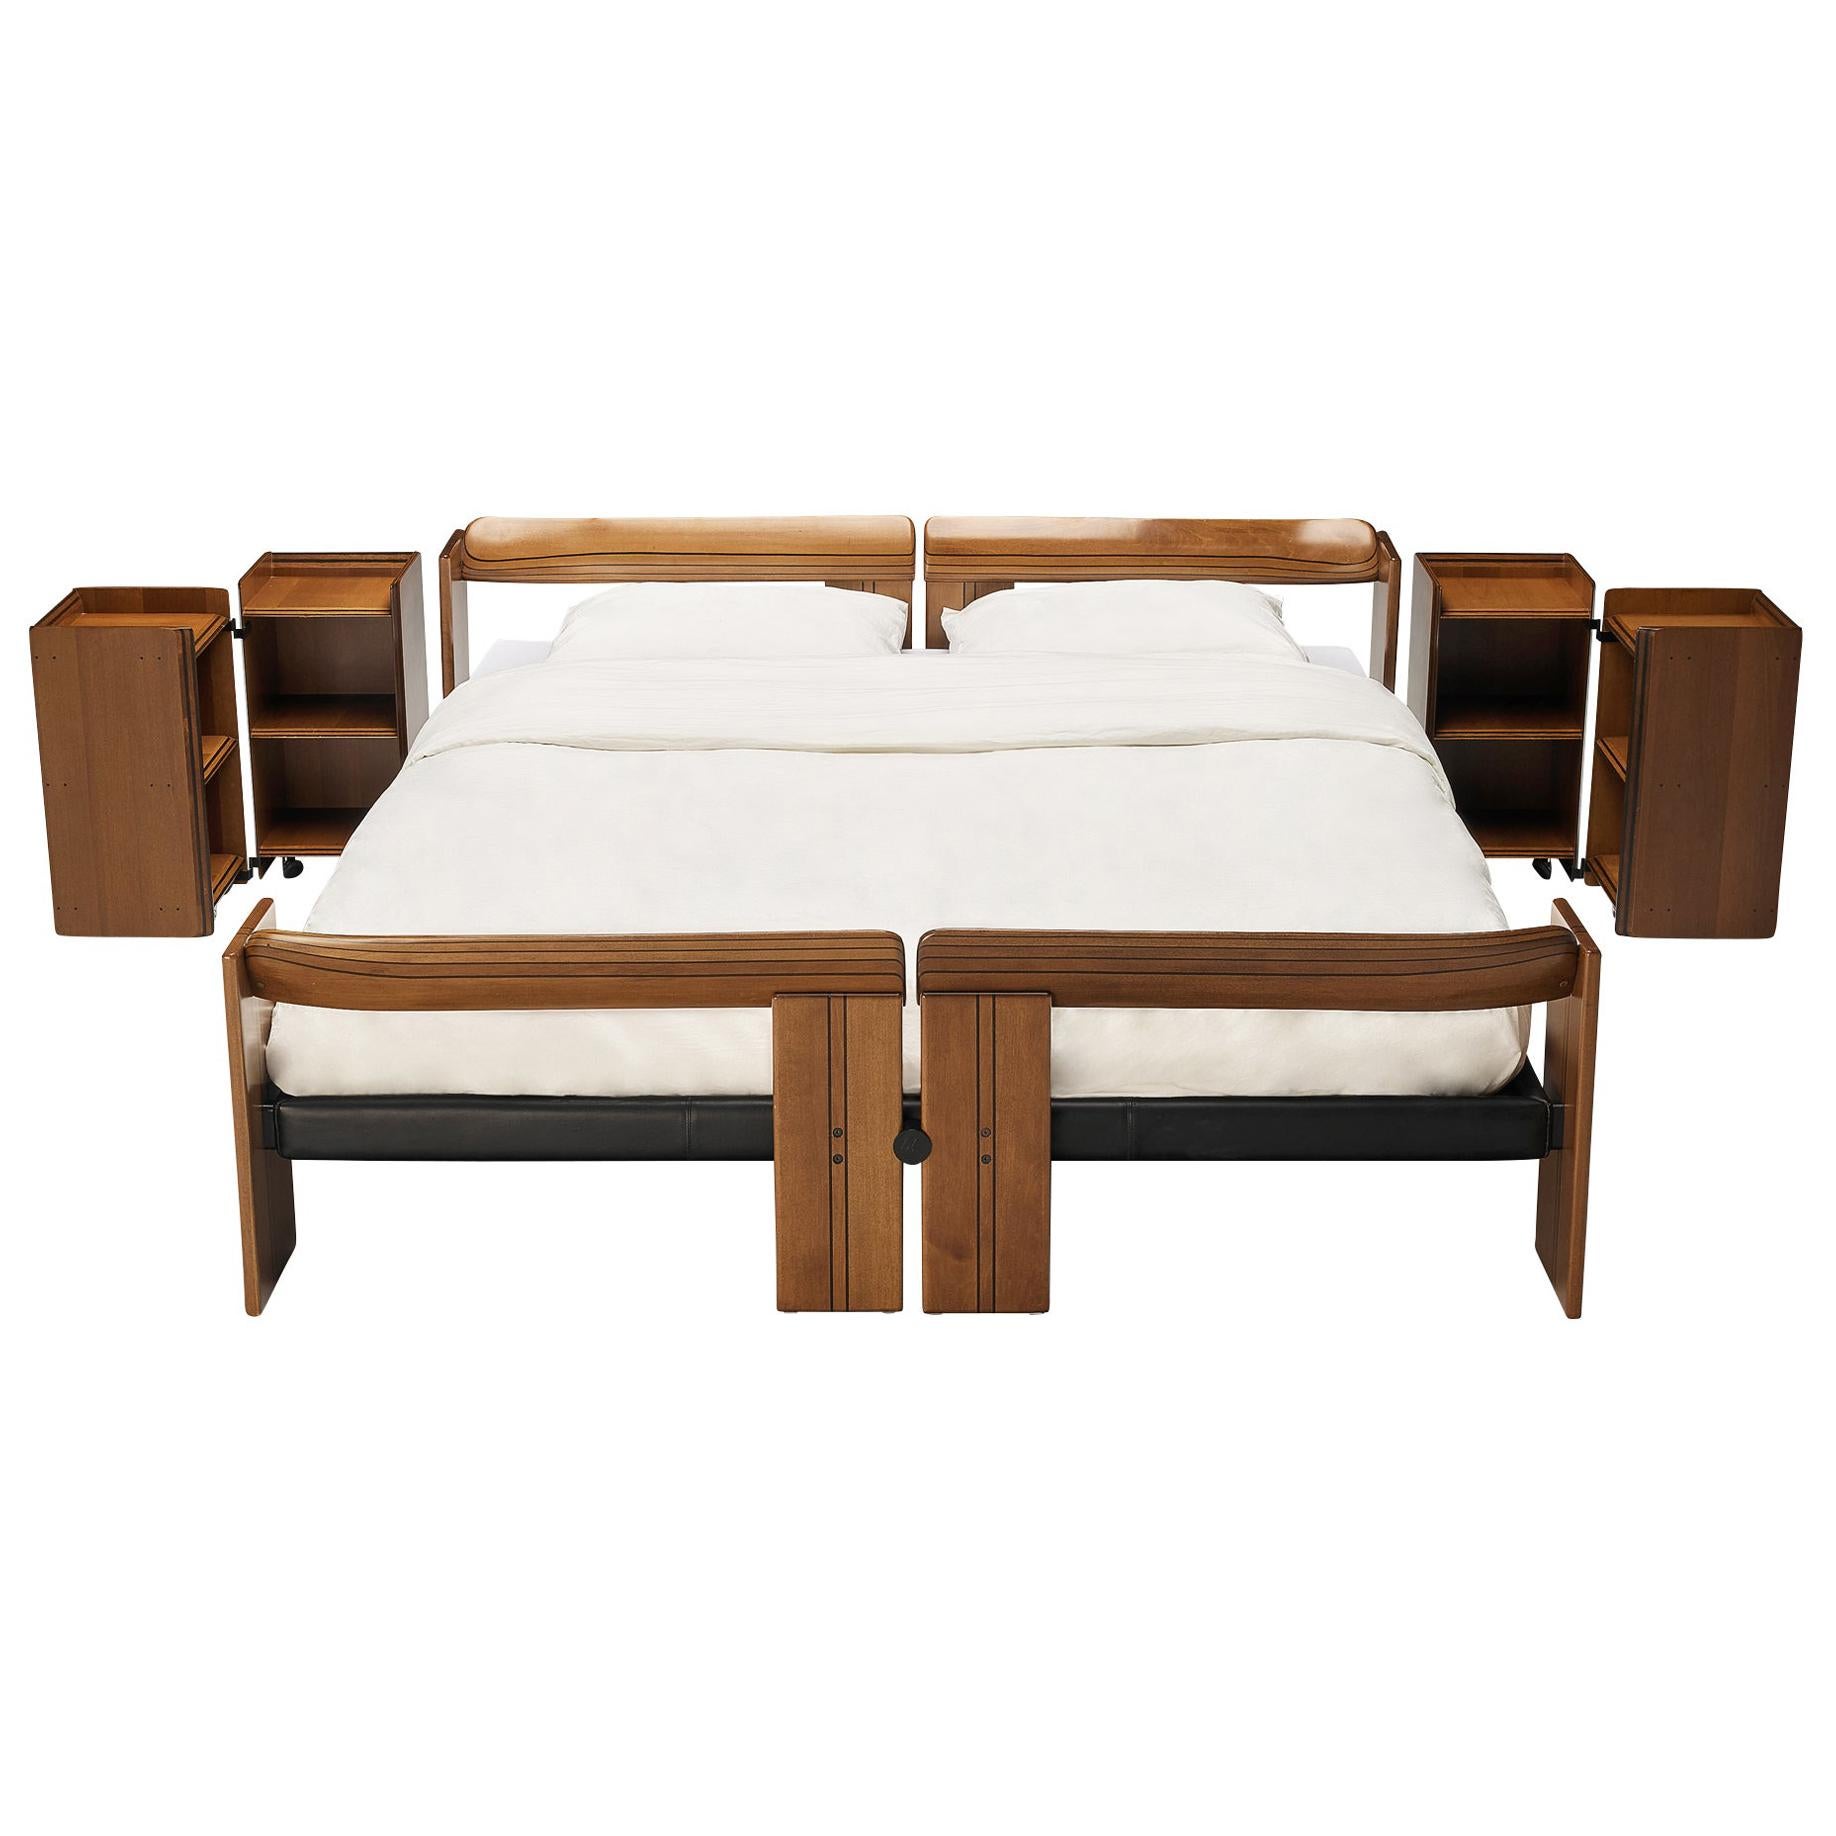 Afra & Tobia Scarpa 'Artona' Double Bed with Nightstands